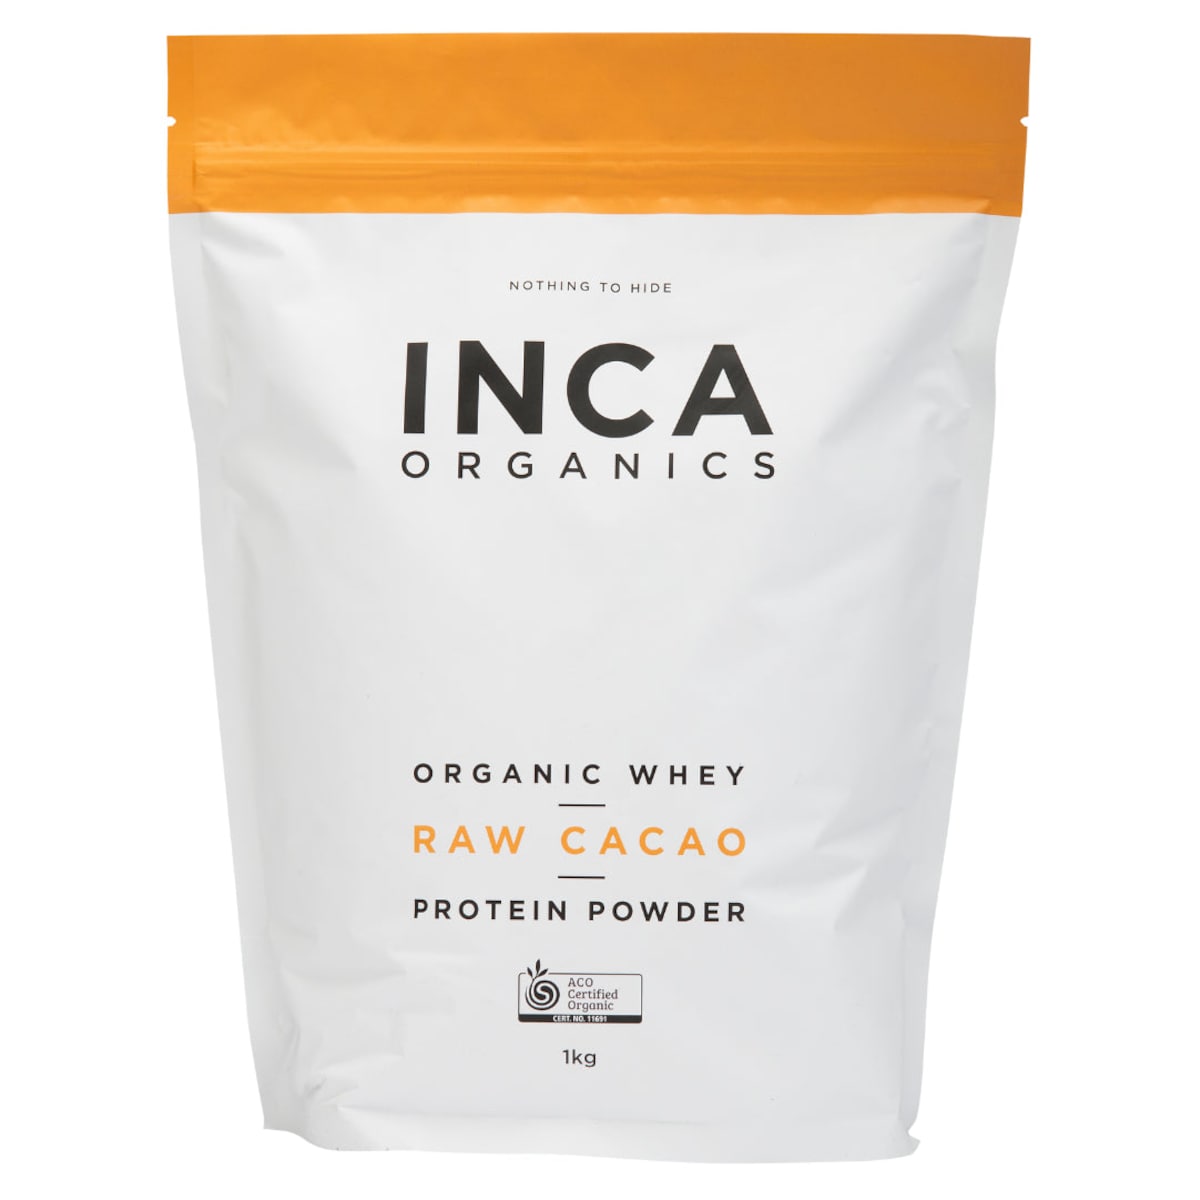 Inca Organics Organic Whey Raw Cacao Protein Powder 1kg Australia